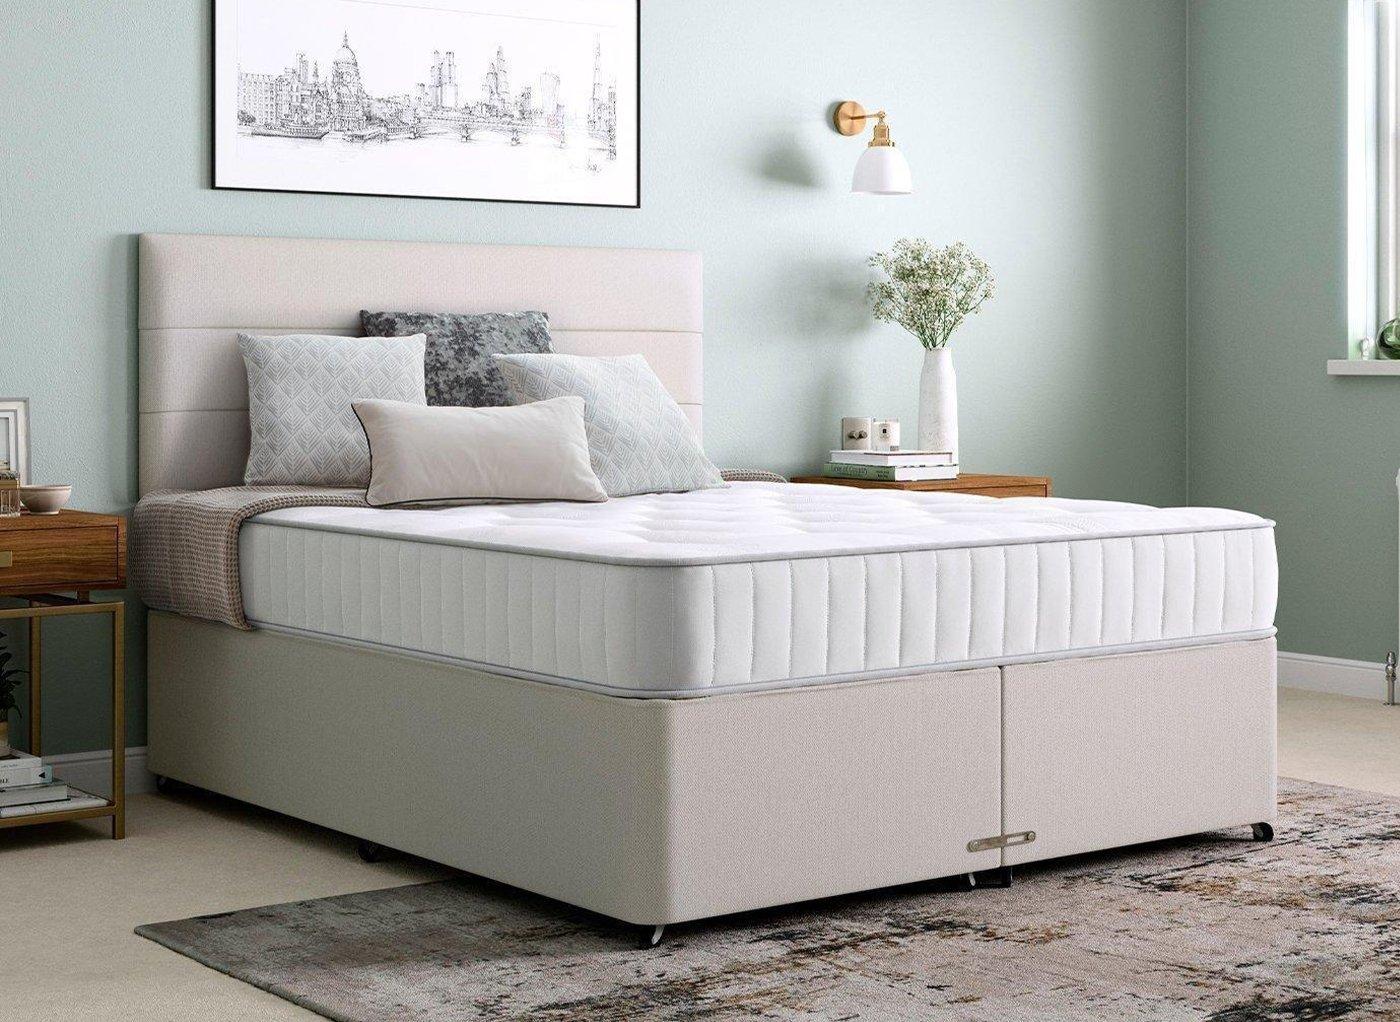 No Headboard 75cm X 190cm Bed Centre Beige Linen Memory Foam Divan Bed With Mattress No Drawers Small single